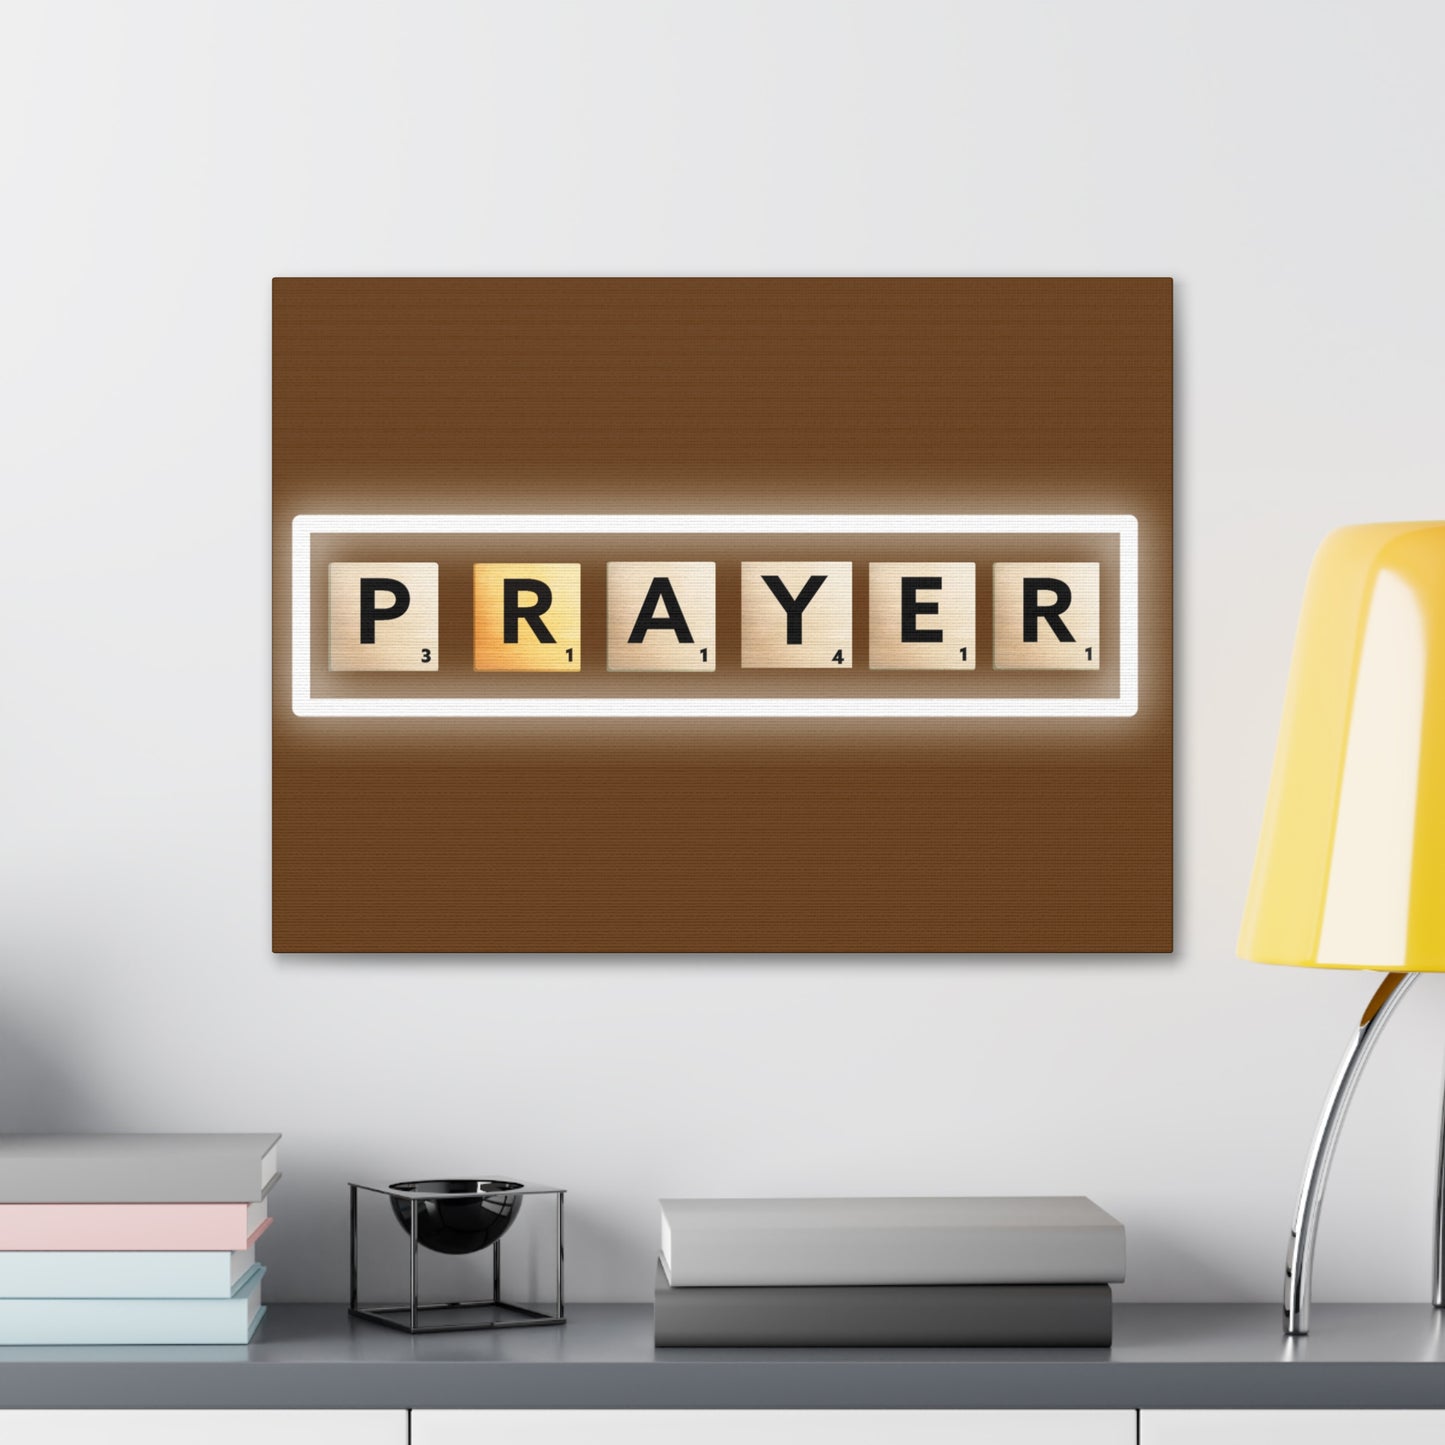 Christian Wall Art: Prayer (Wood Frame Ready to Hang)